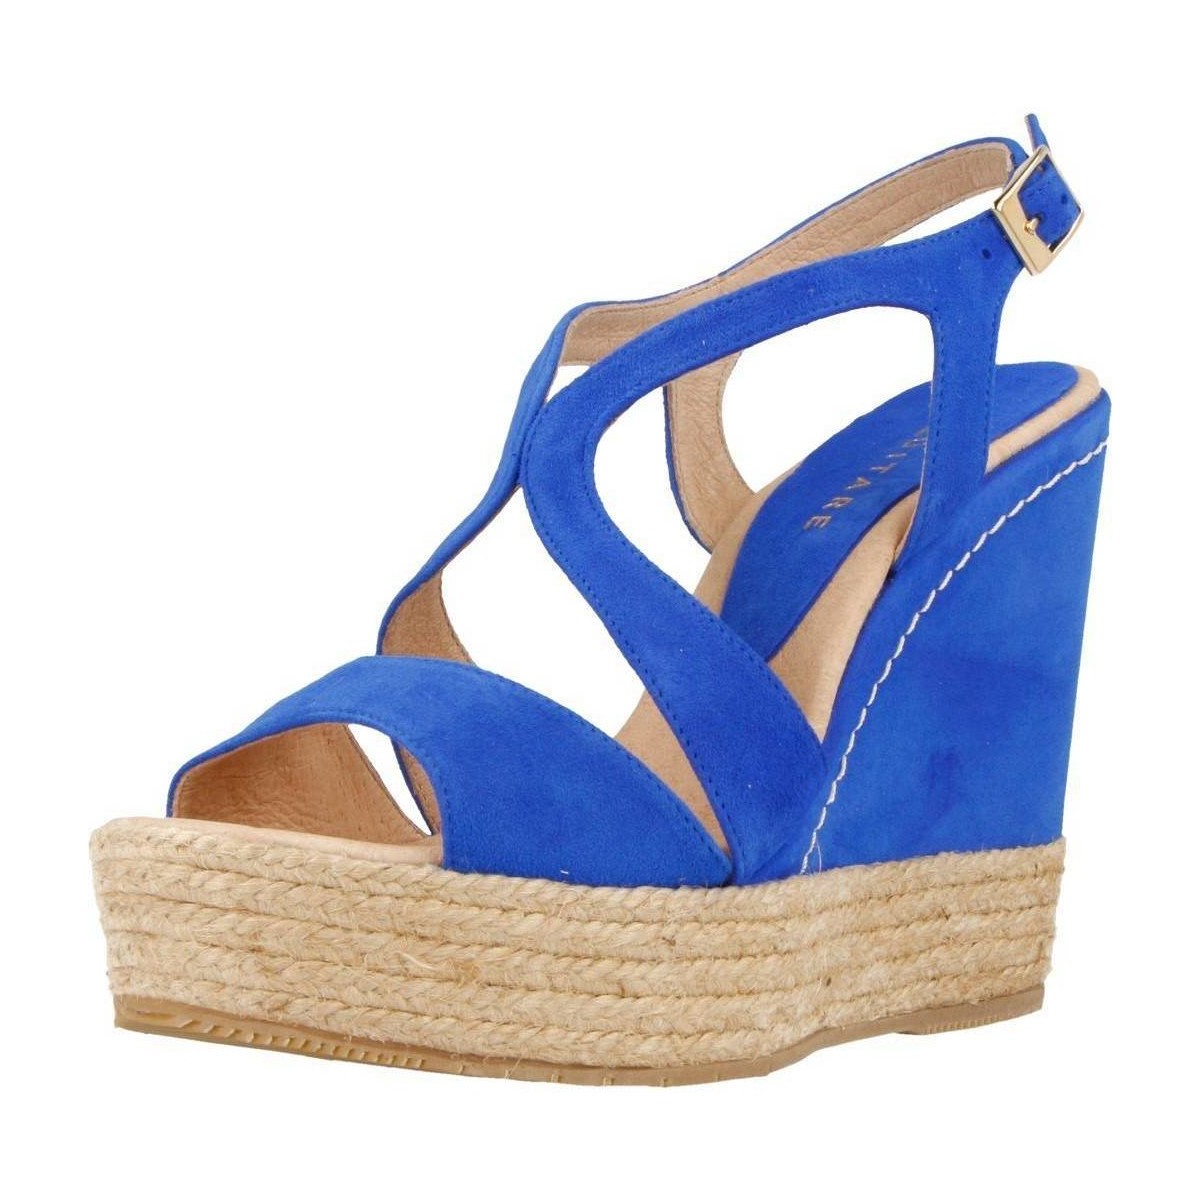 Topánky Žena Sandále Equitare JONES29 Modrá